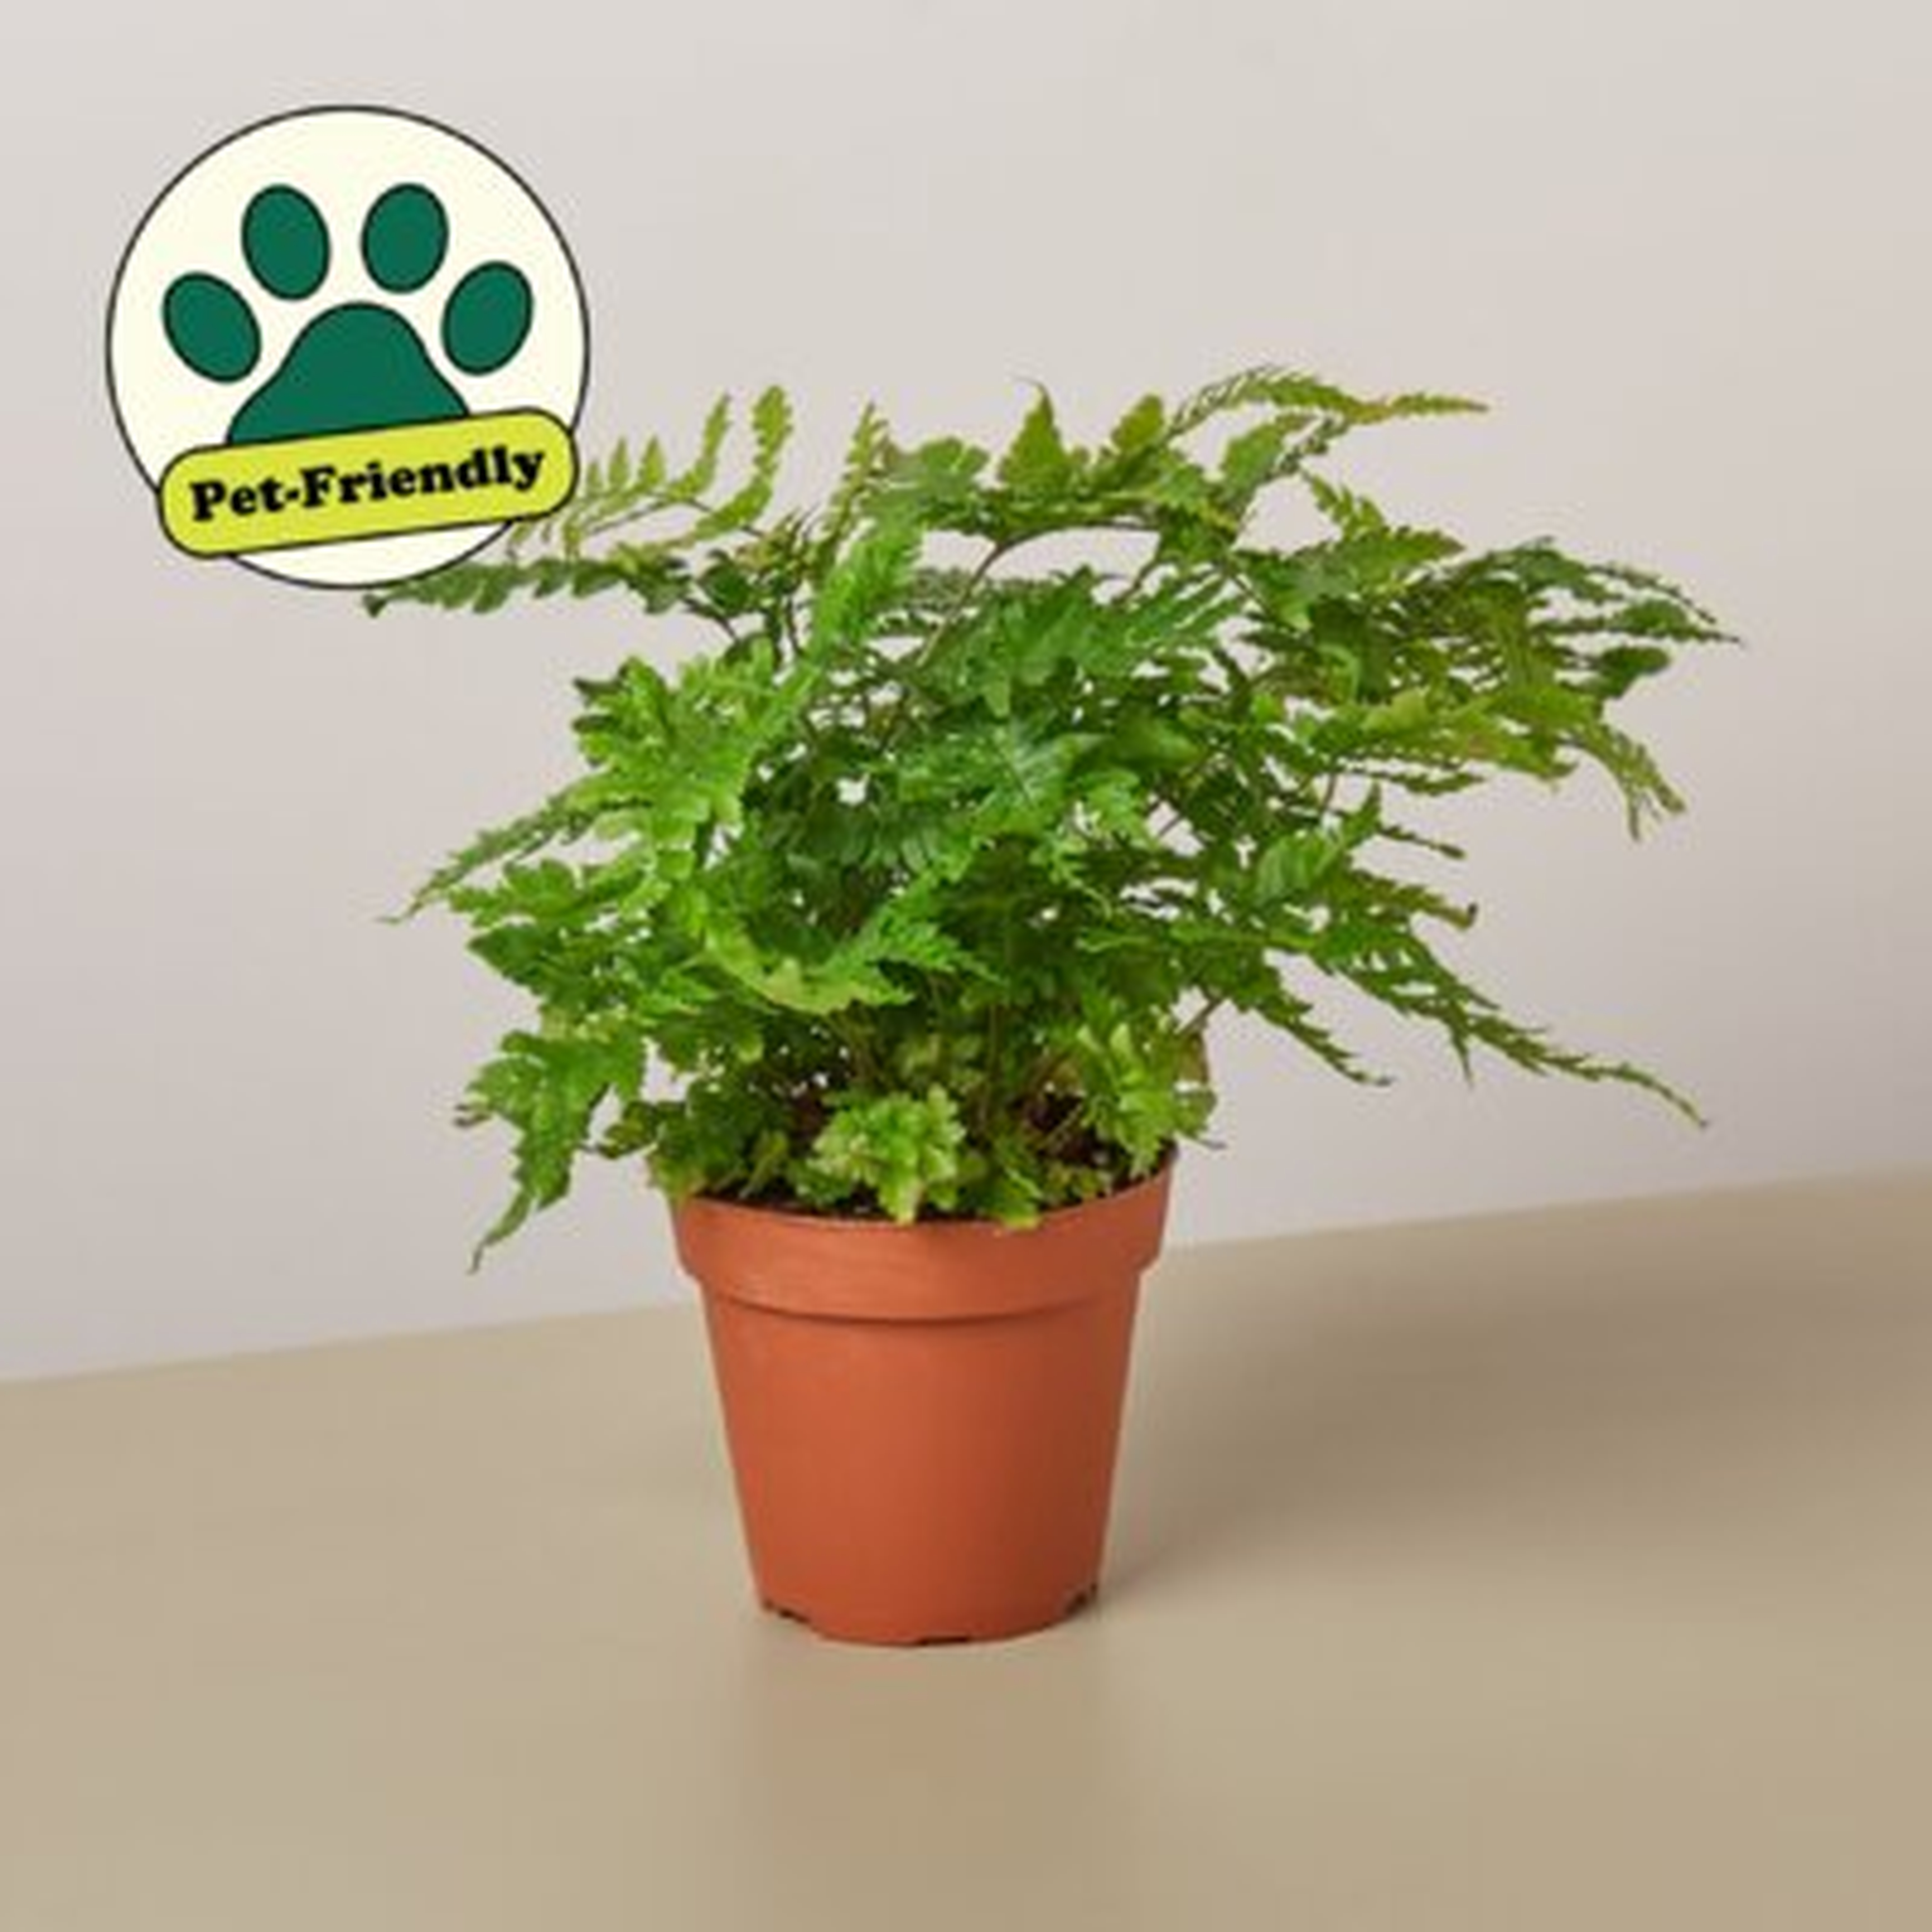 Autumn Fern (8" - 14" Tall) - Live Plant - FREE Care Guide - 6" Pot - Low Light House Plant - Wayfair